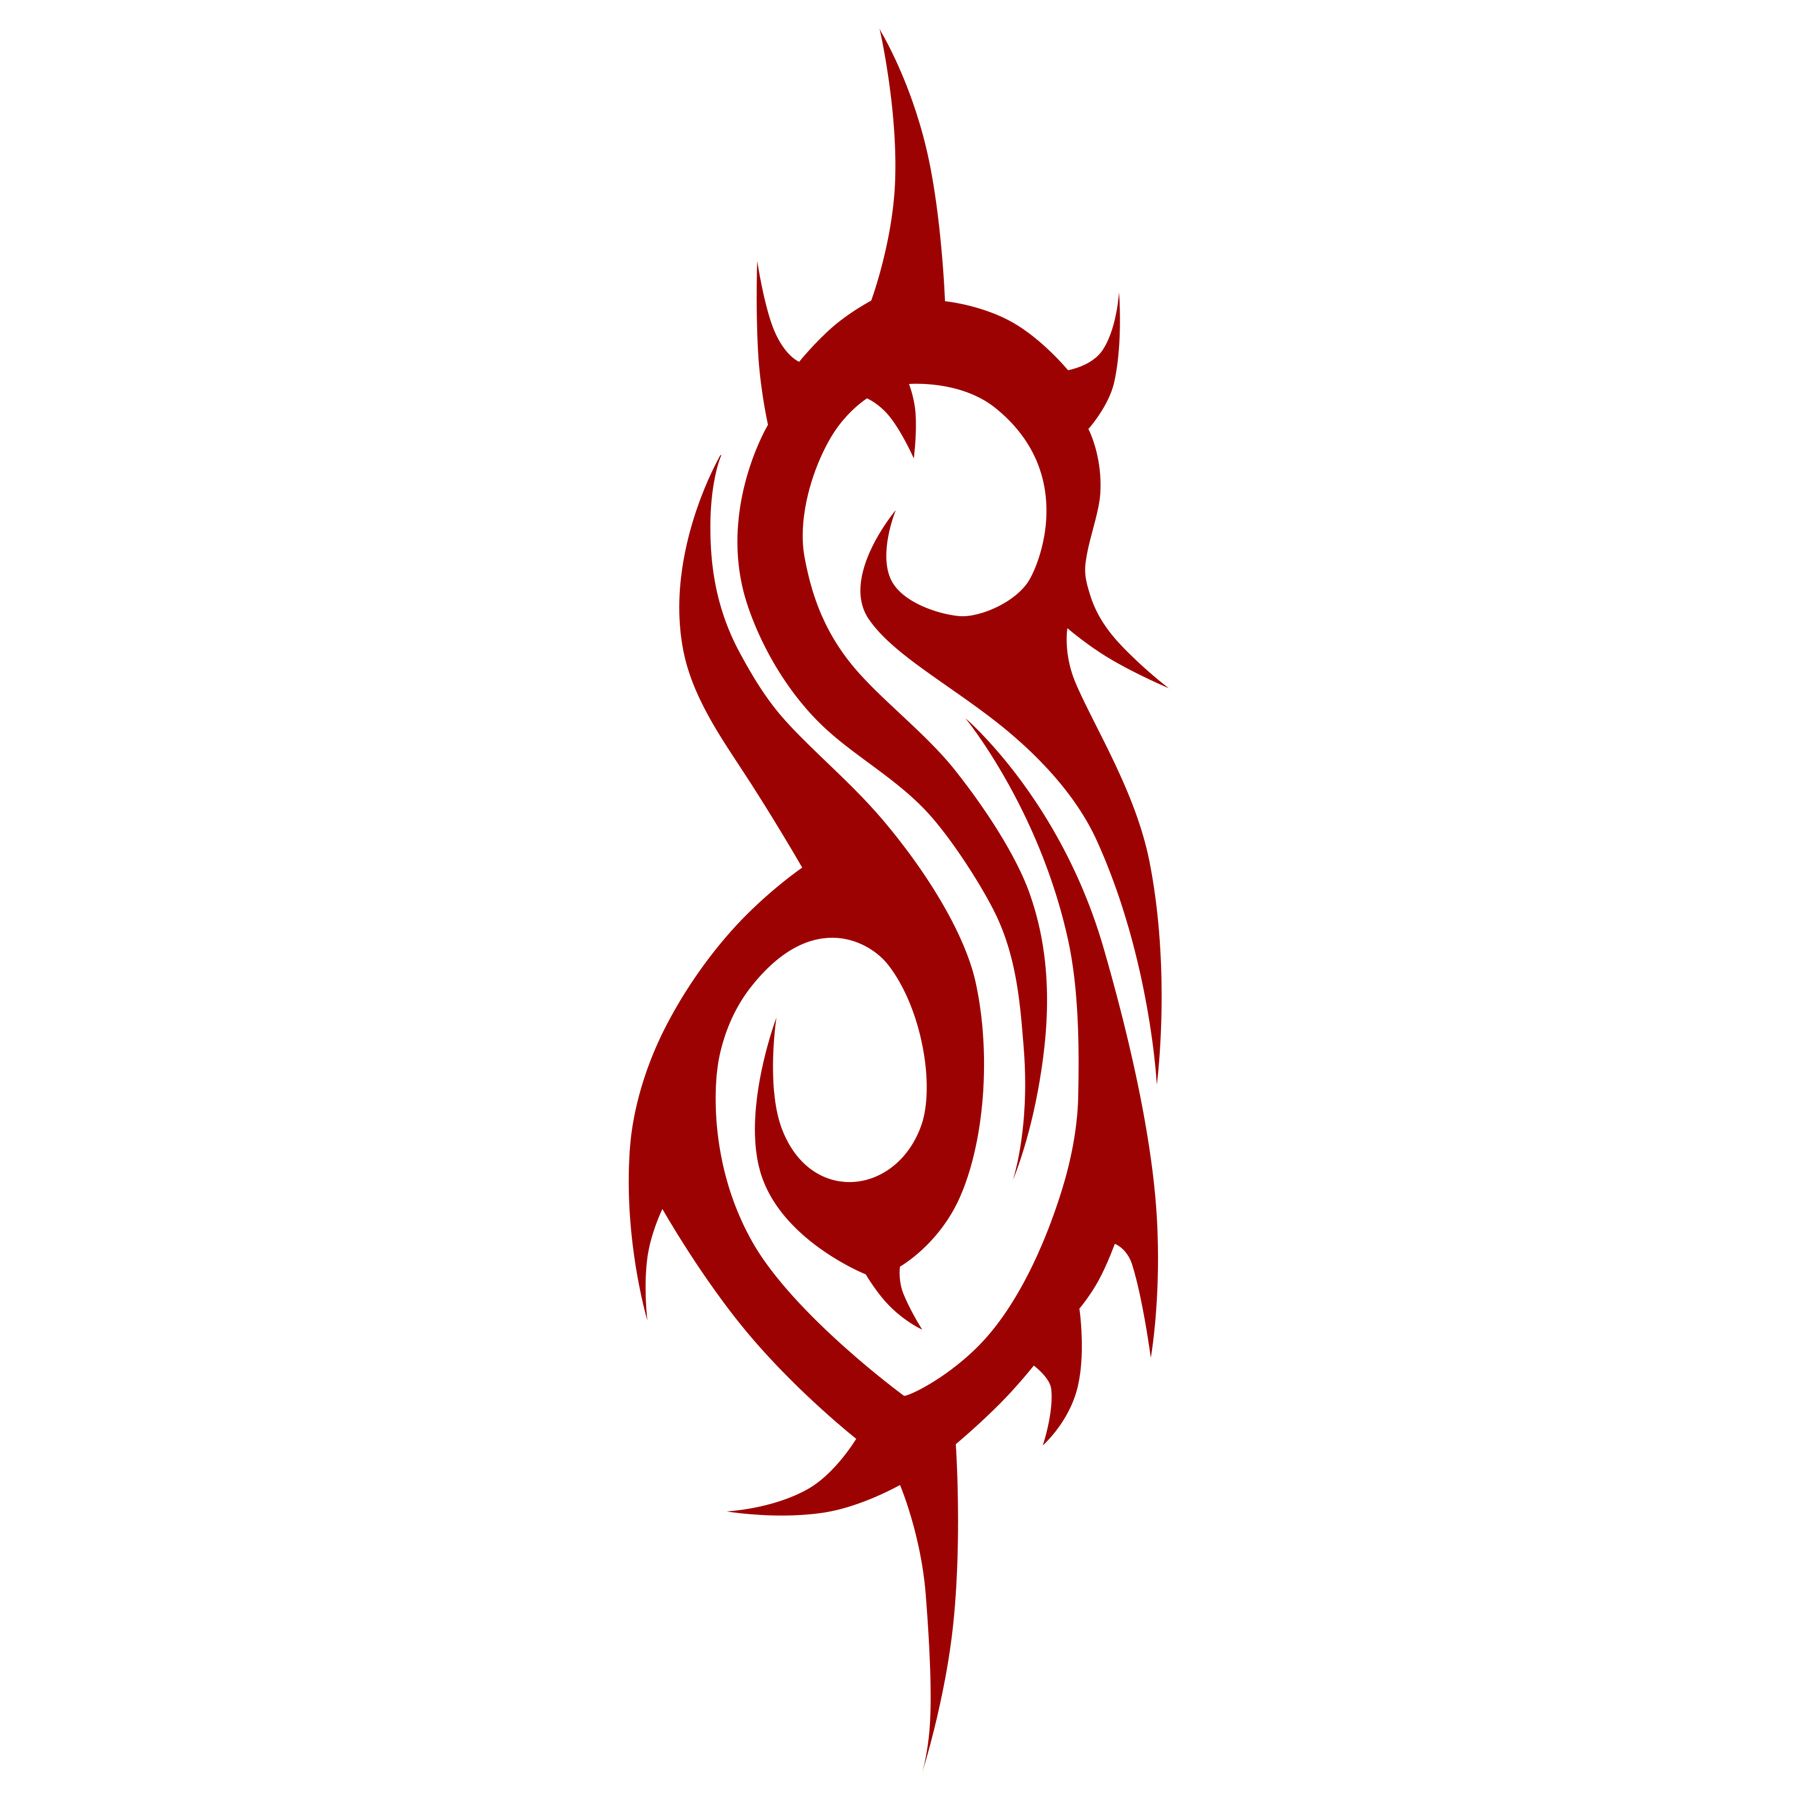  thiết kế logo Slipknot